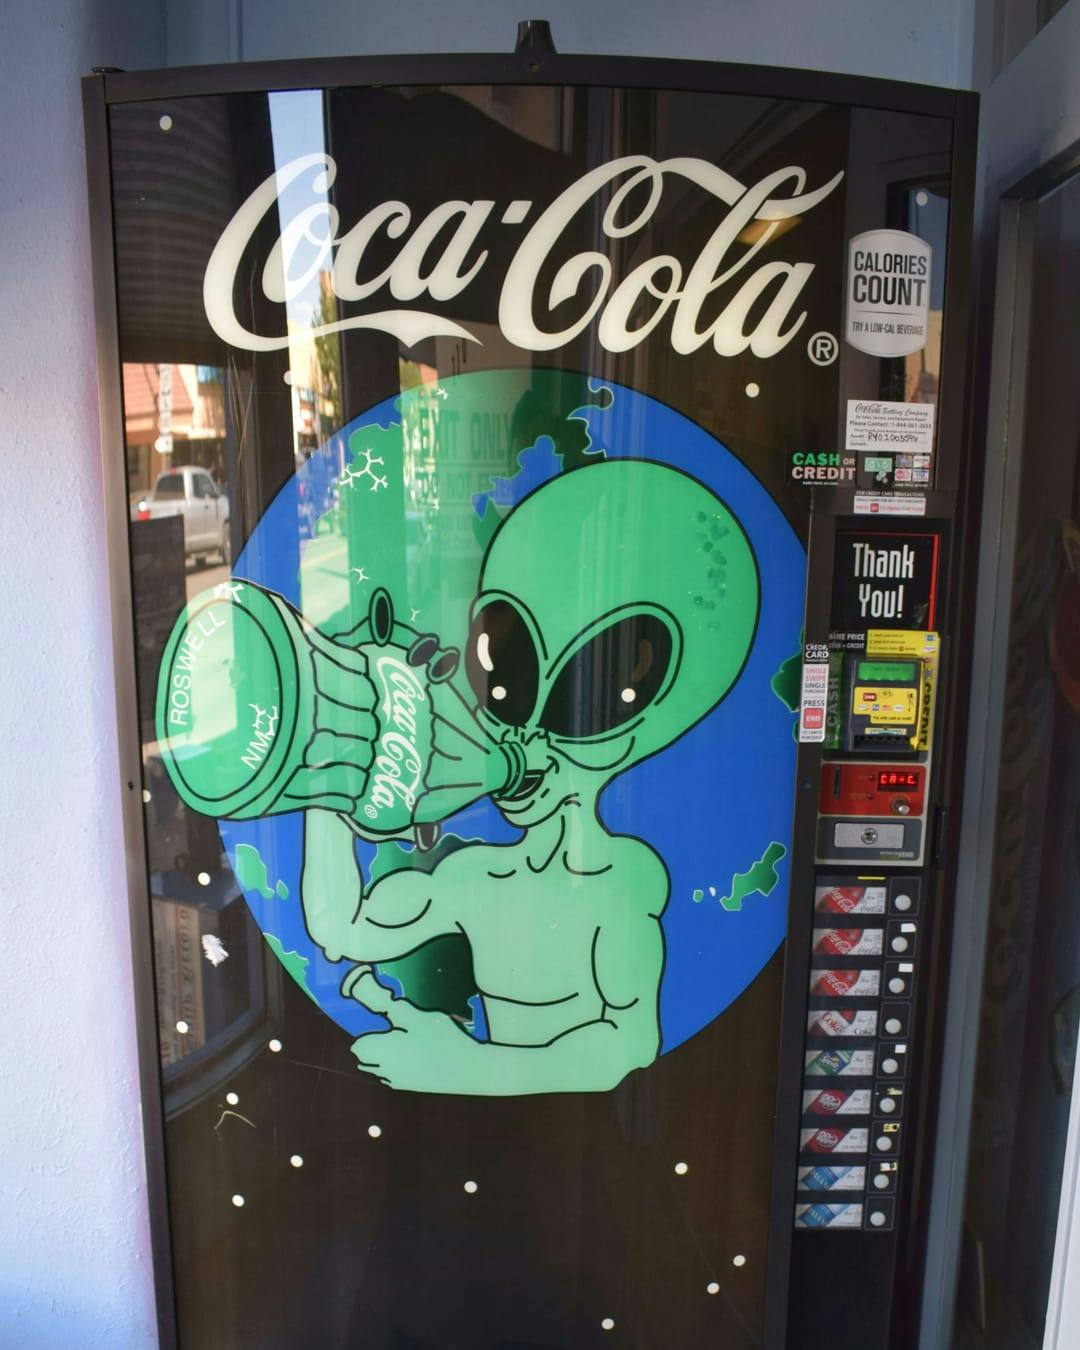 It's well known aliens prefer Coke to Pepsi